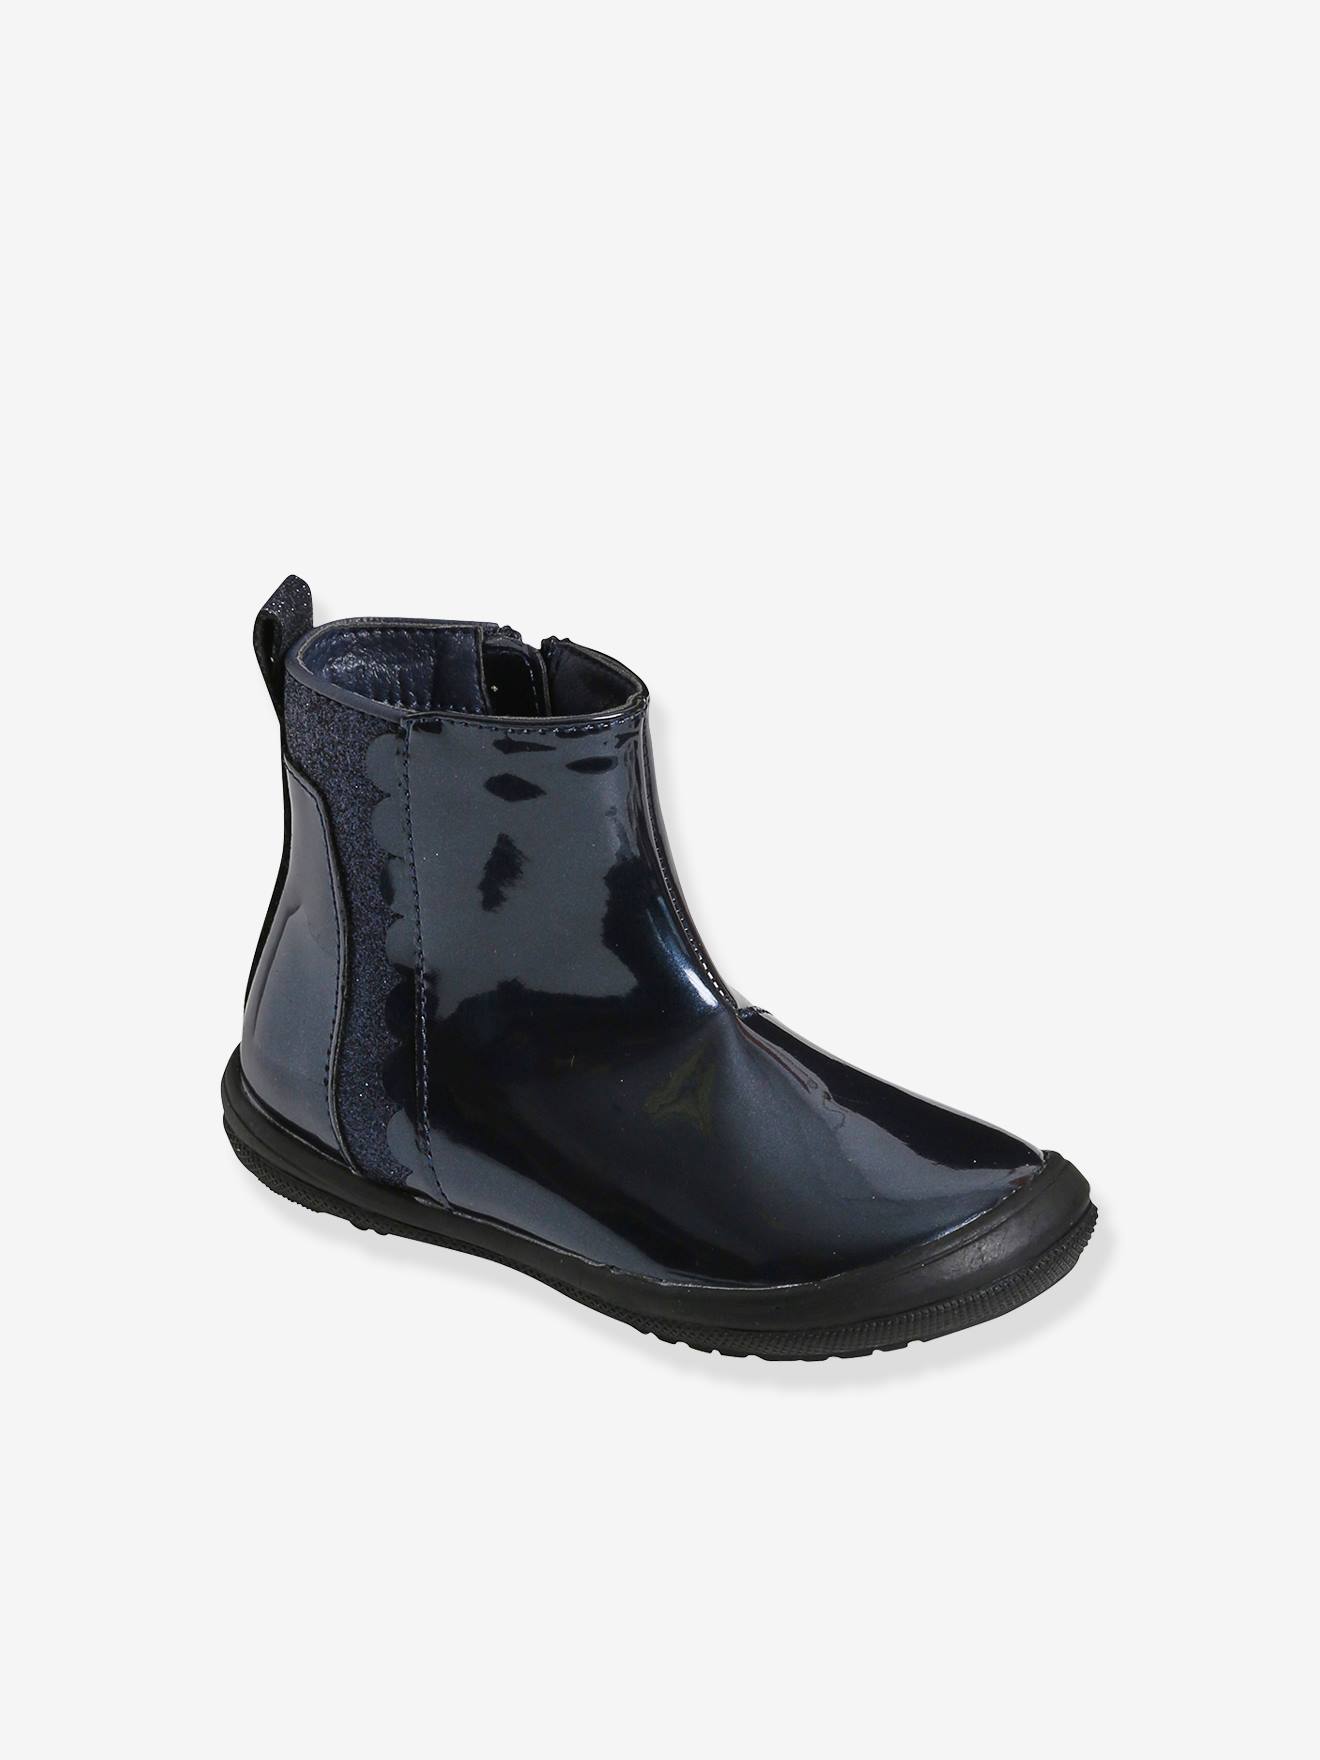 boots vernis fille collection maternelle bleu marine